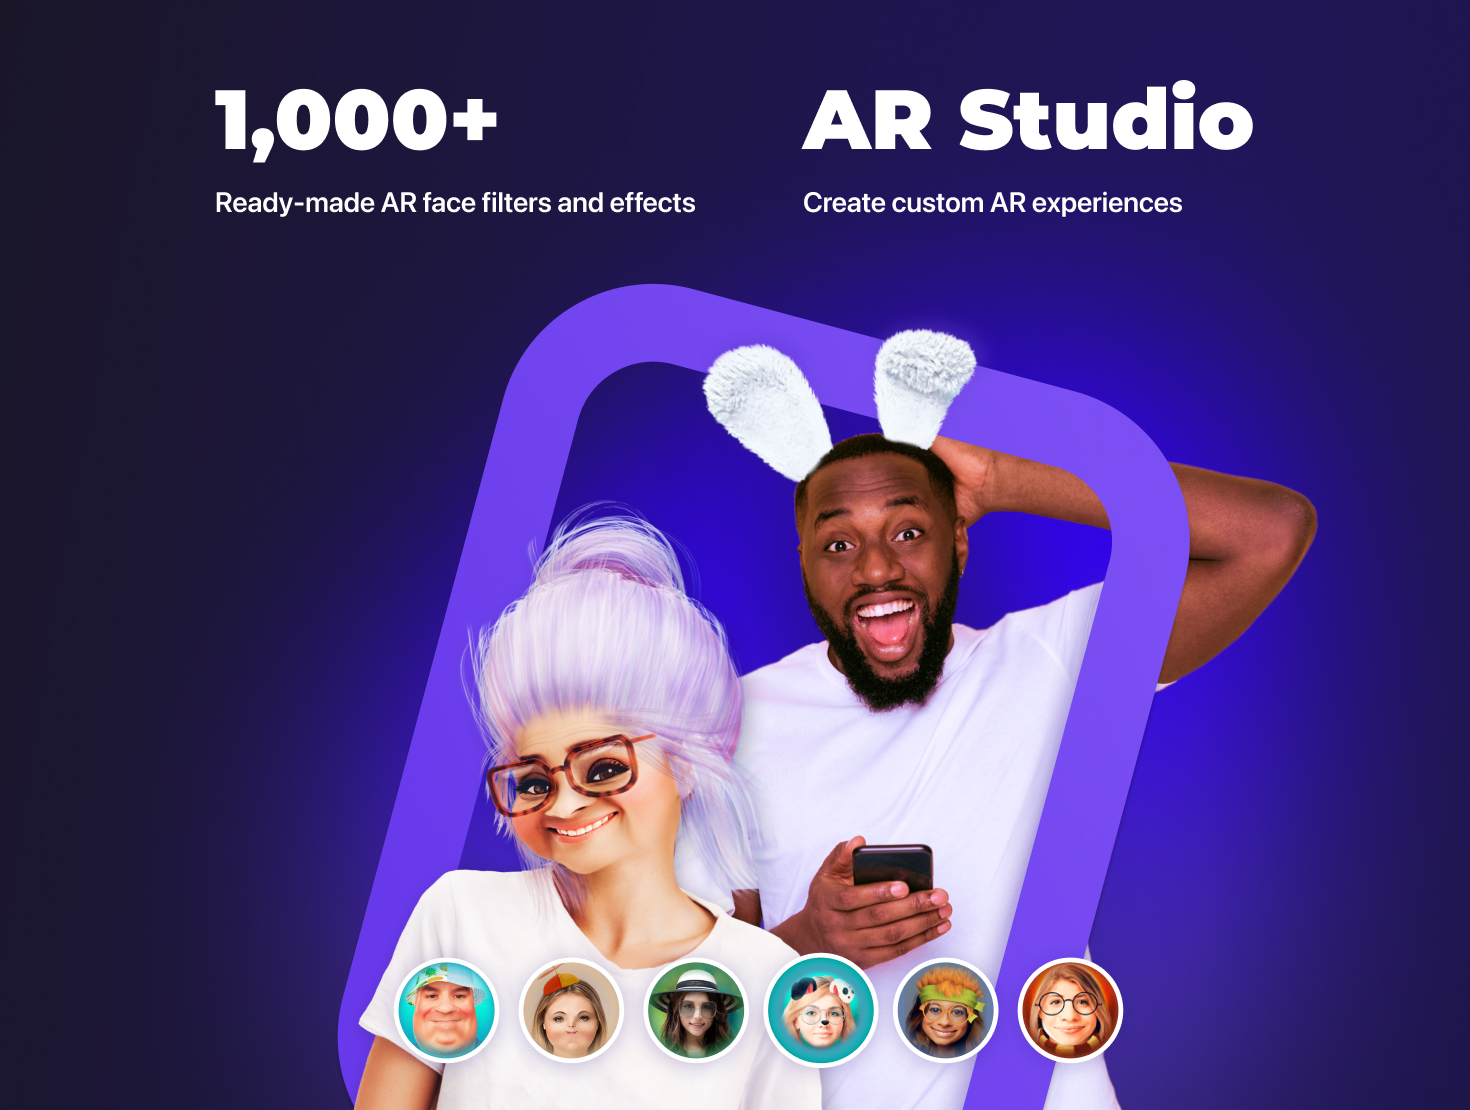 1,000+ ready-made AR face filters and effects. AR Studio to create custom AR experiences